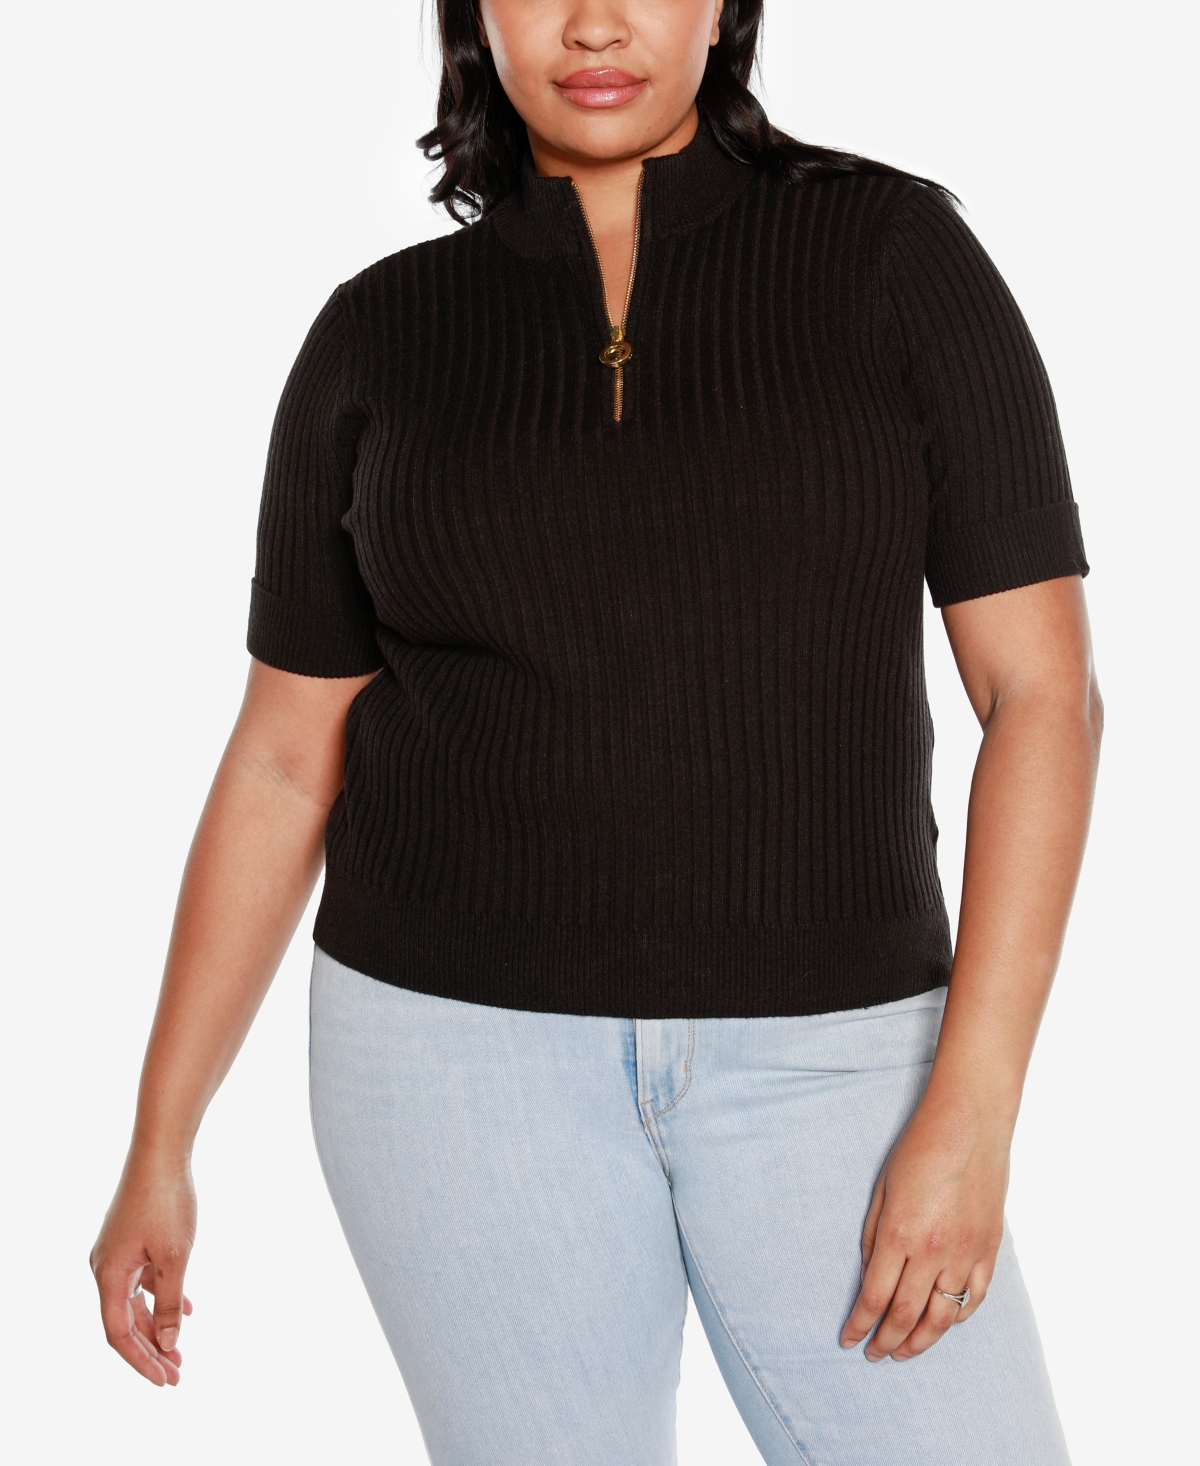 Black Label Plus Size Mock Neck Zip Front Ribbed Short Sleeve Sweater - Key Lime